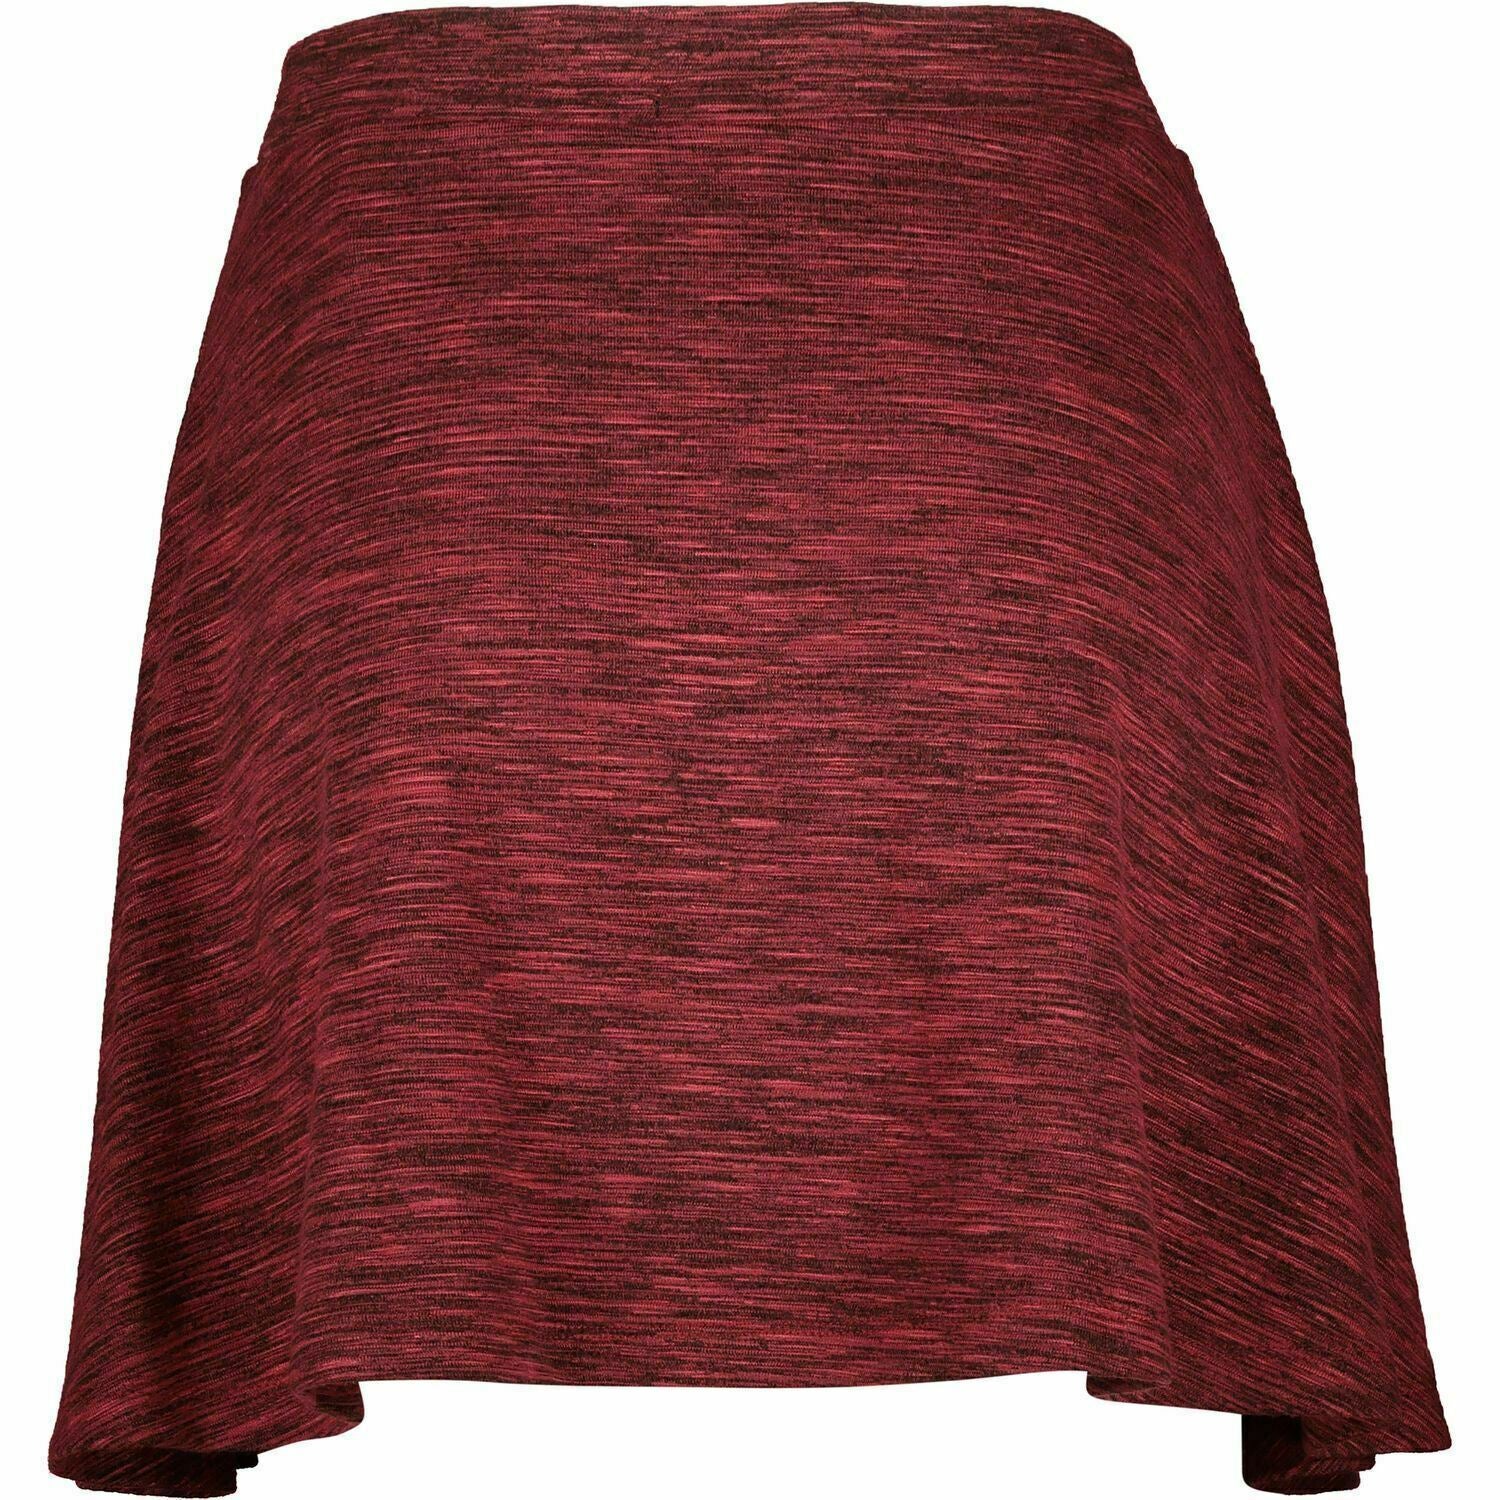 SUPERDRY Women's AUGUSTA RYDELL Skirt, Rocky Red, size XS / UK 8